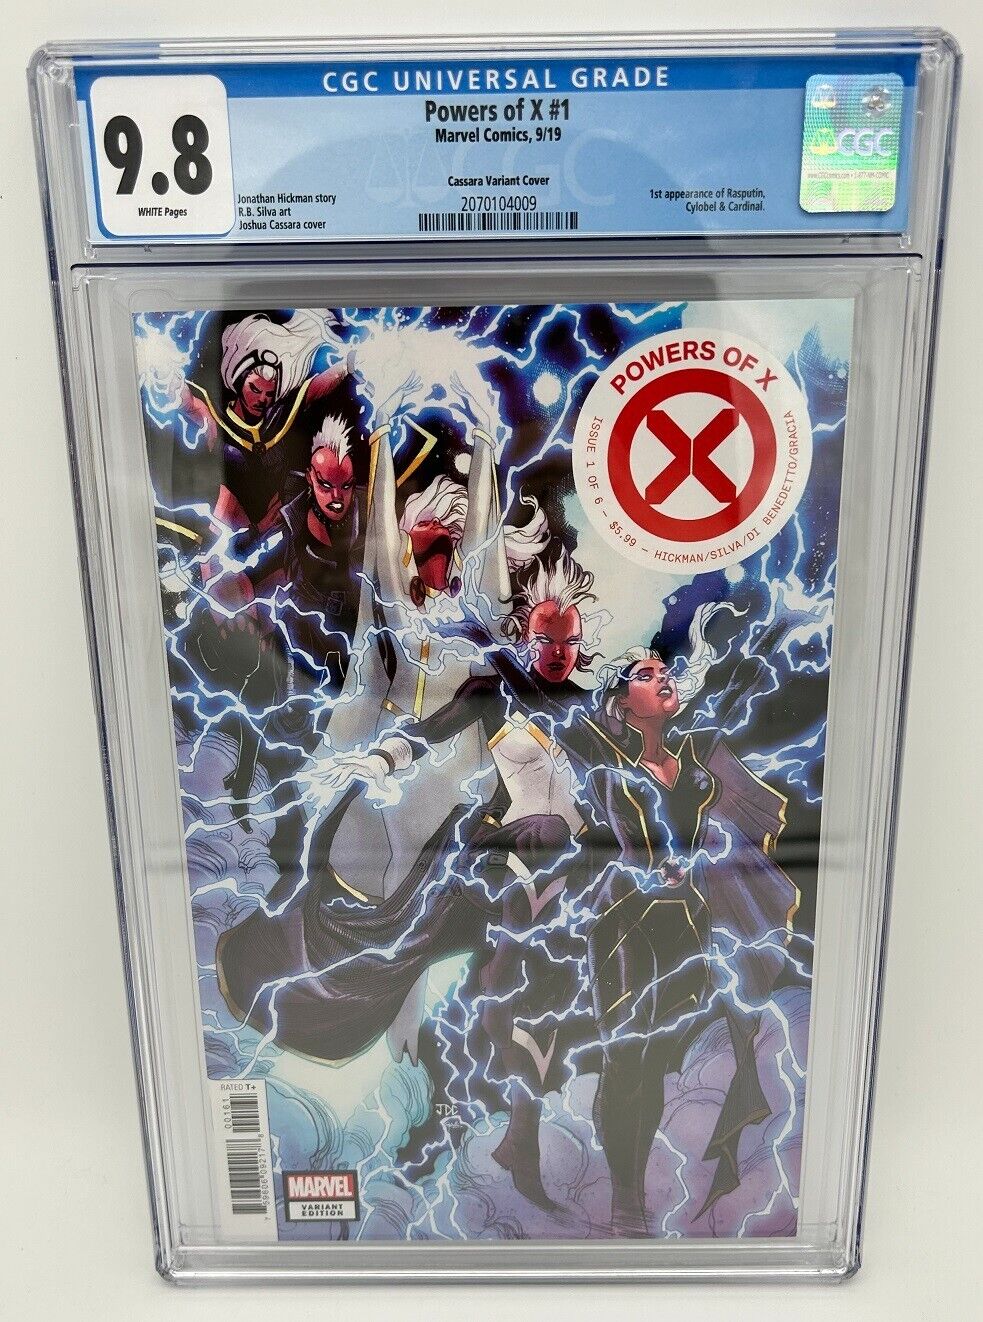 Powers of X # 1 - Joshua Cassara Cover Variant - Marvel Comics 2019 - CGC 9.8